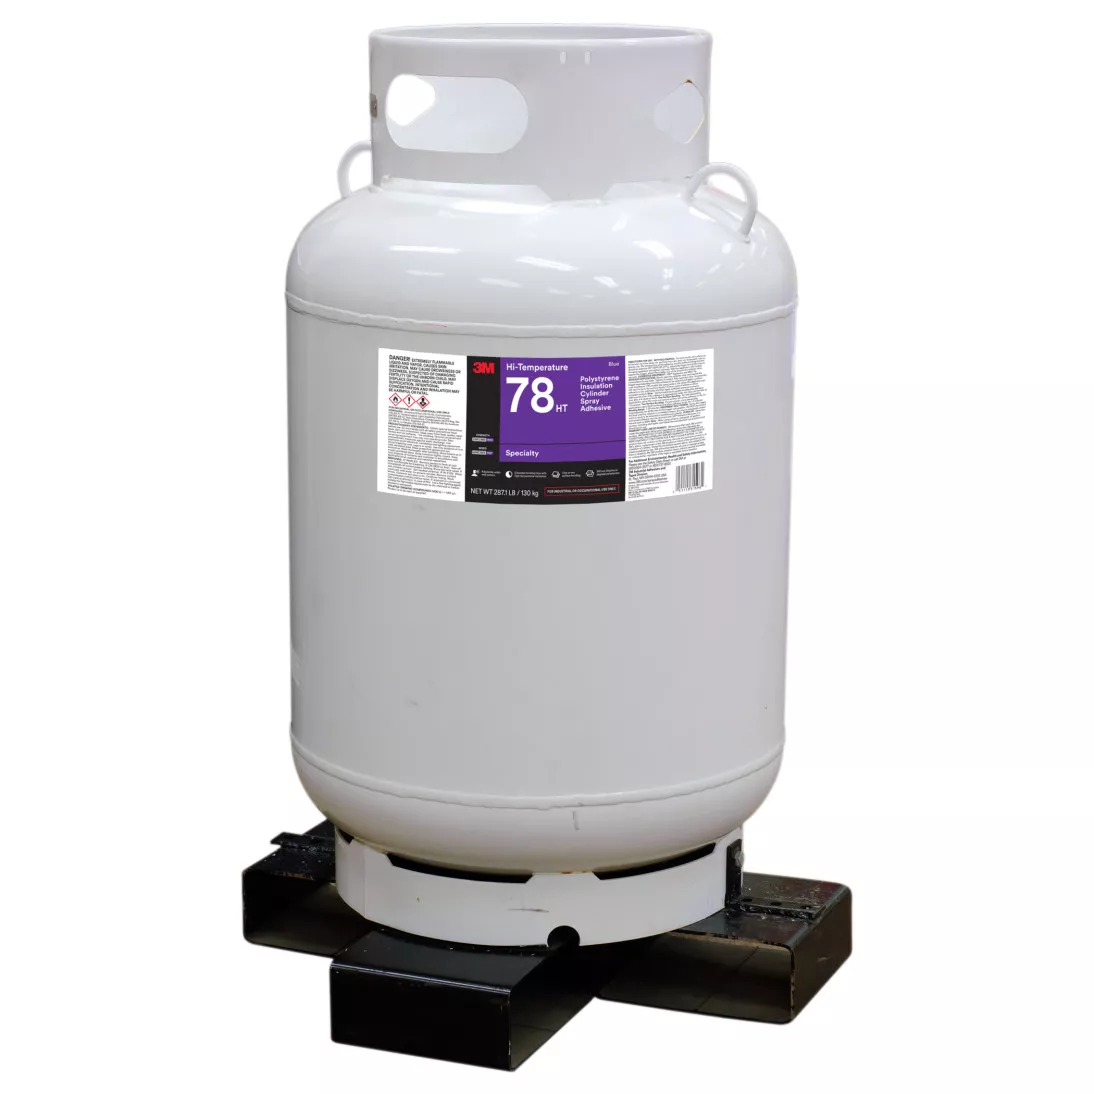 3M™ Hi-Temperature Polystyrene Insulation 78 HT Cylinder Spray Adhesive,
Blue, Jumbo Cylinder (Net Wt 287.1 lb)